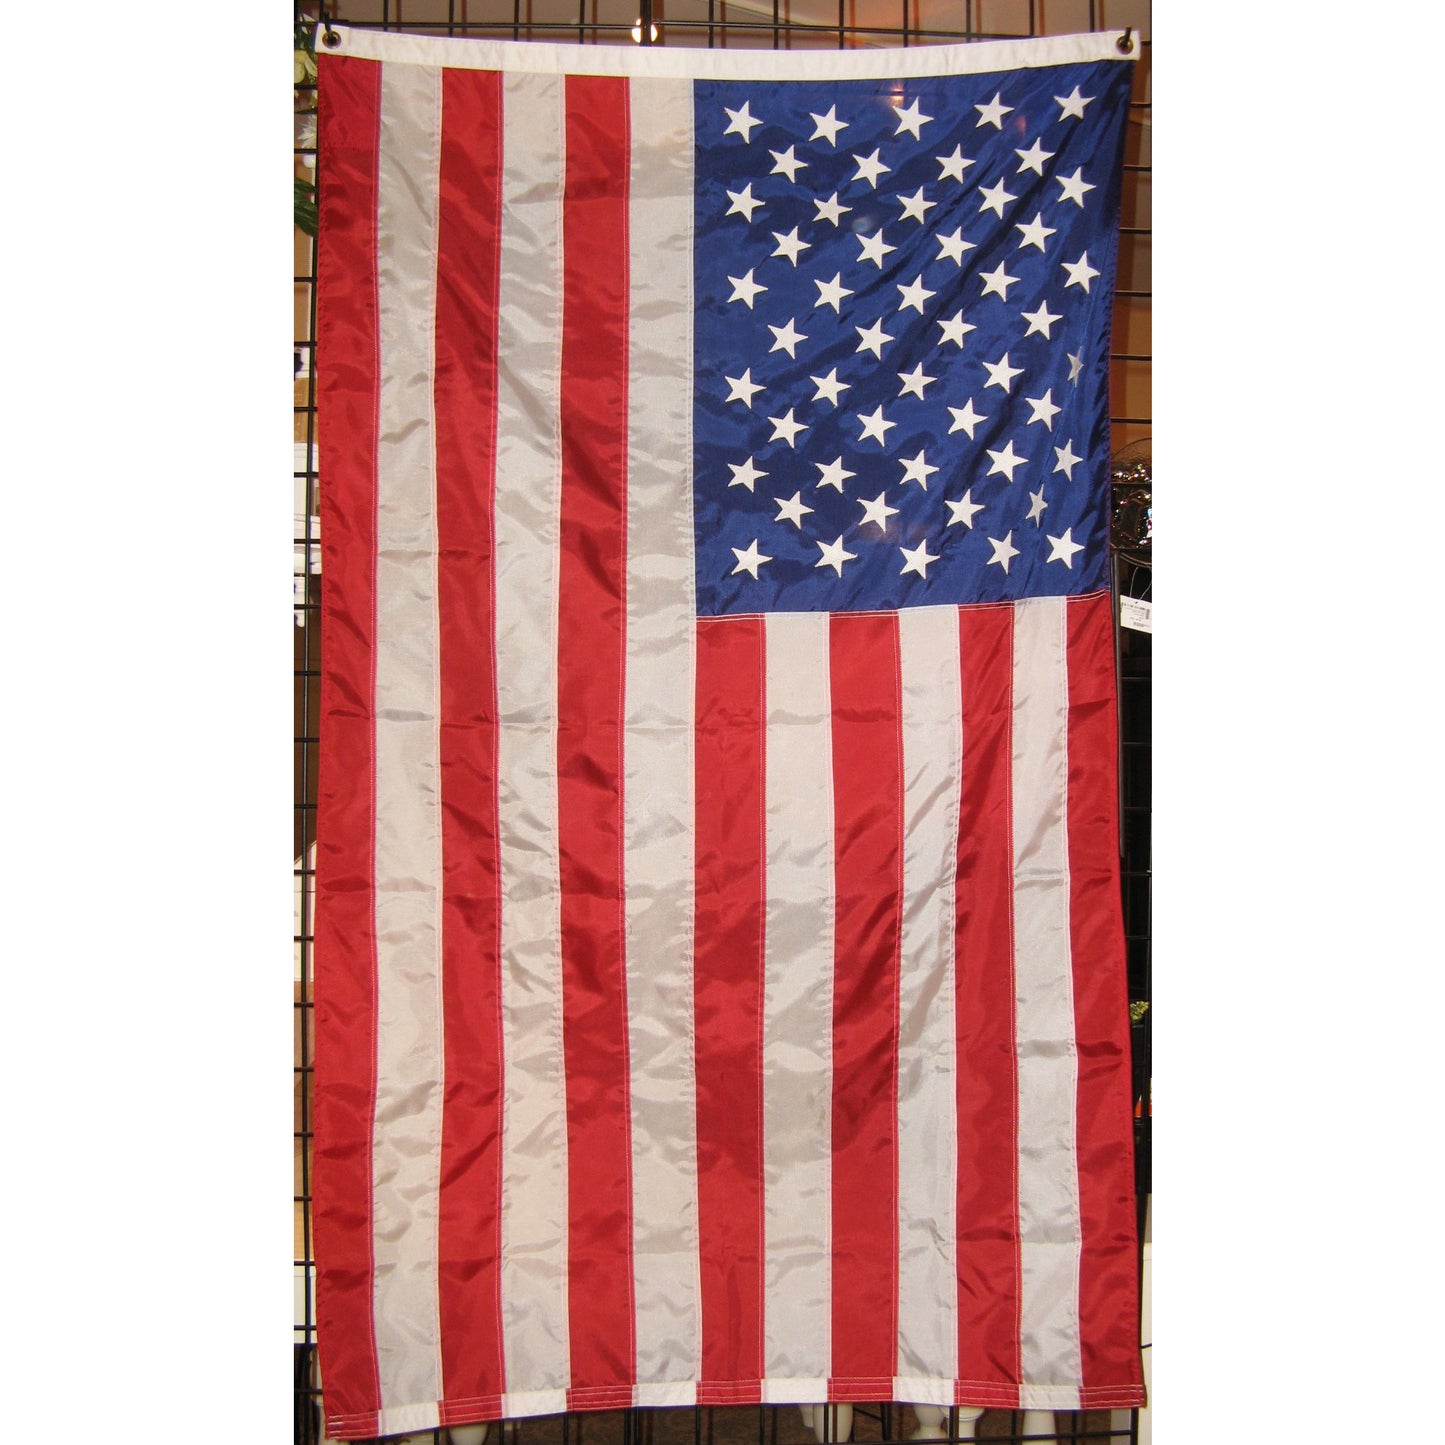 USA 3' x 5' Nylon Flag